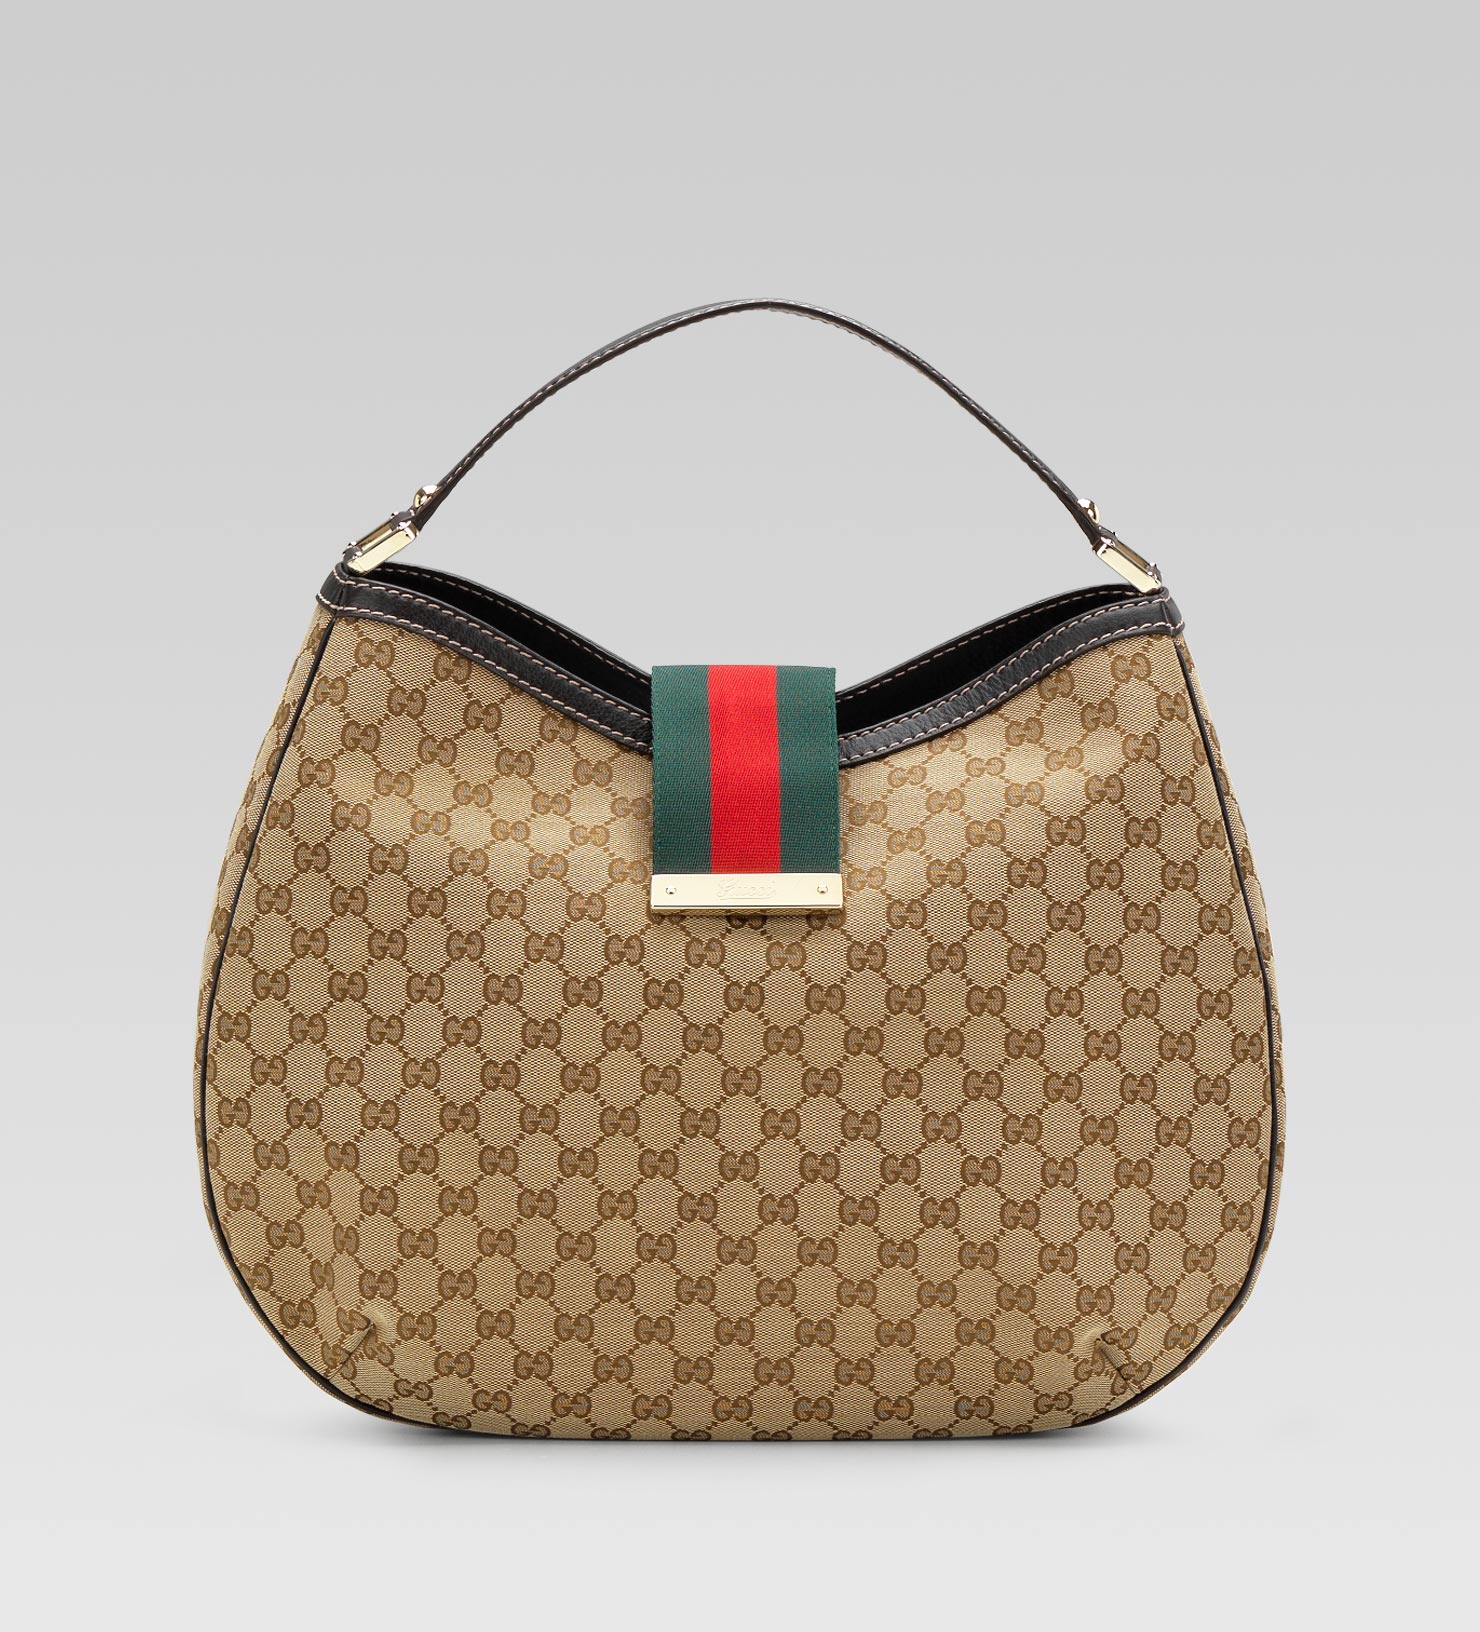 Gucci vs LV wallet : r/handbags